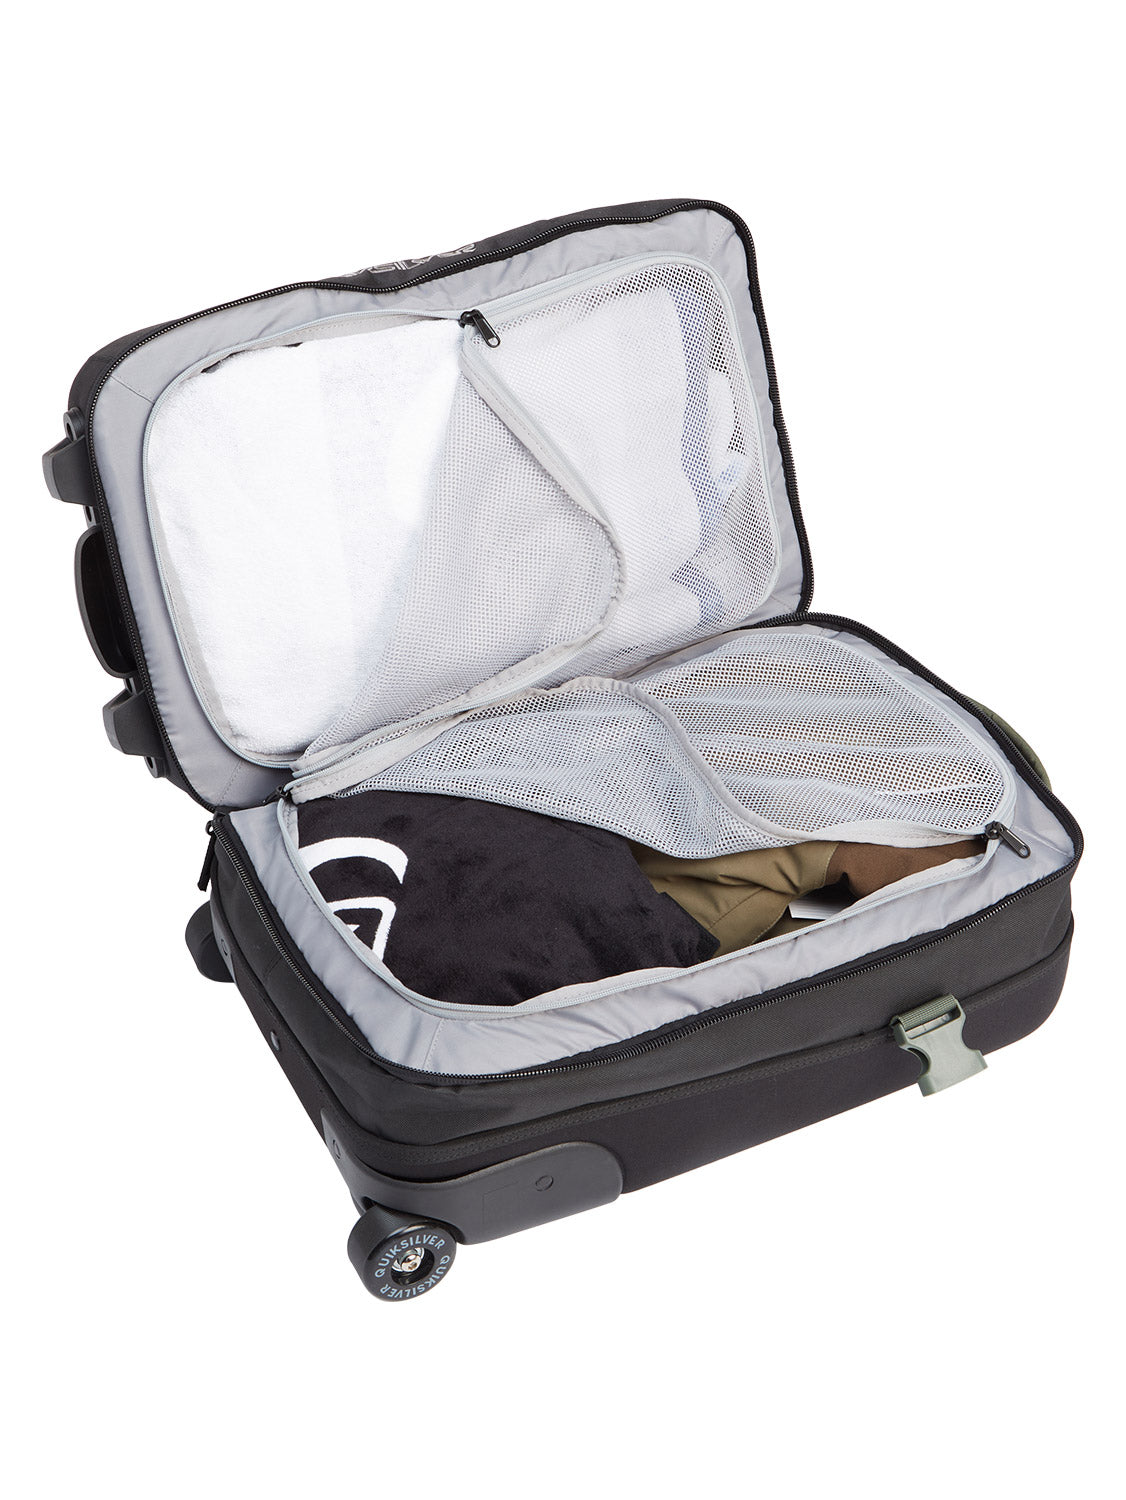 Quiksilver Men's Horizon 41L Wheelie Luggage Bag